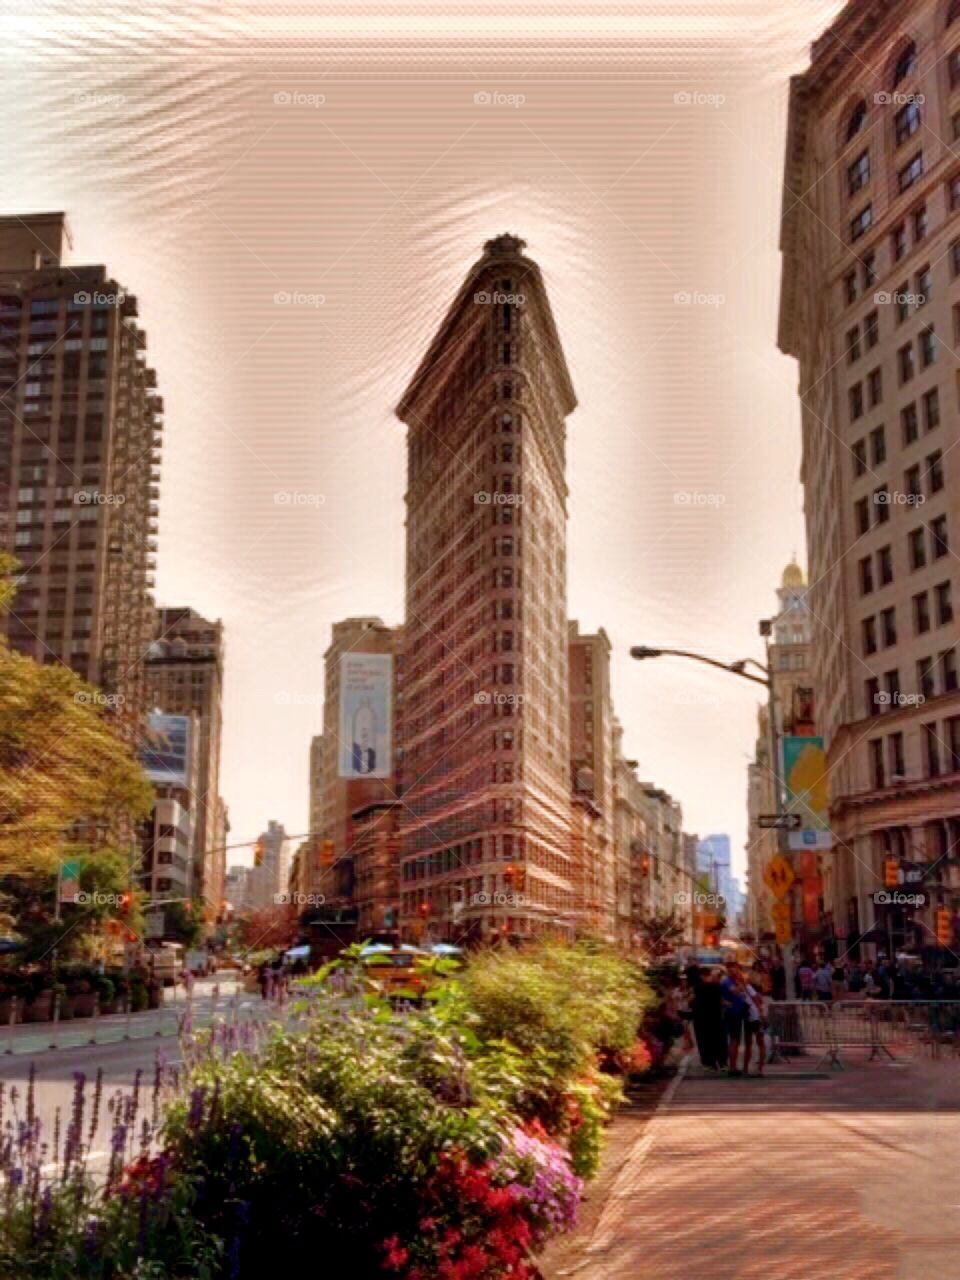 Flatiron Building - 5th Ave, Madison Square Park, Manhattan, New York City. 